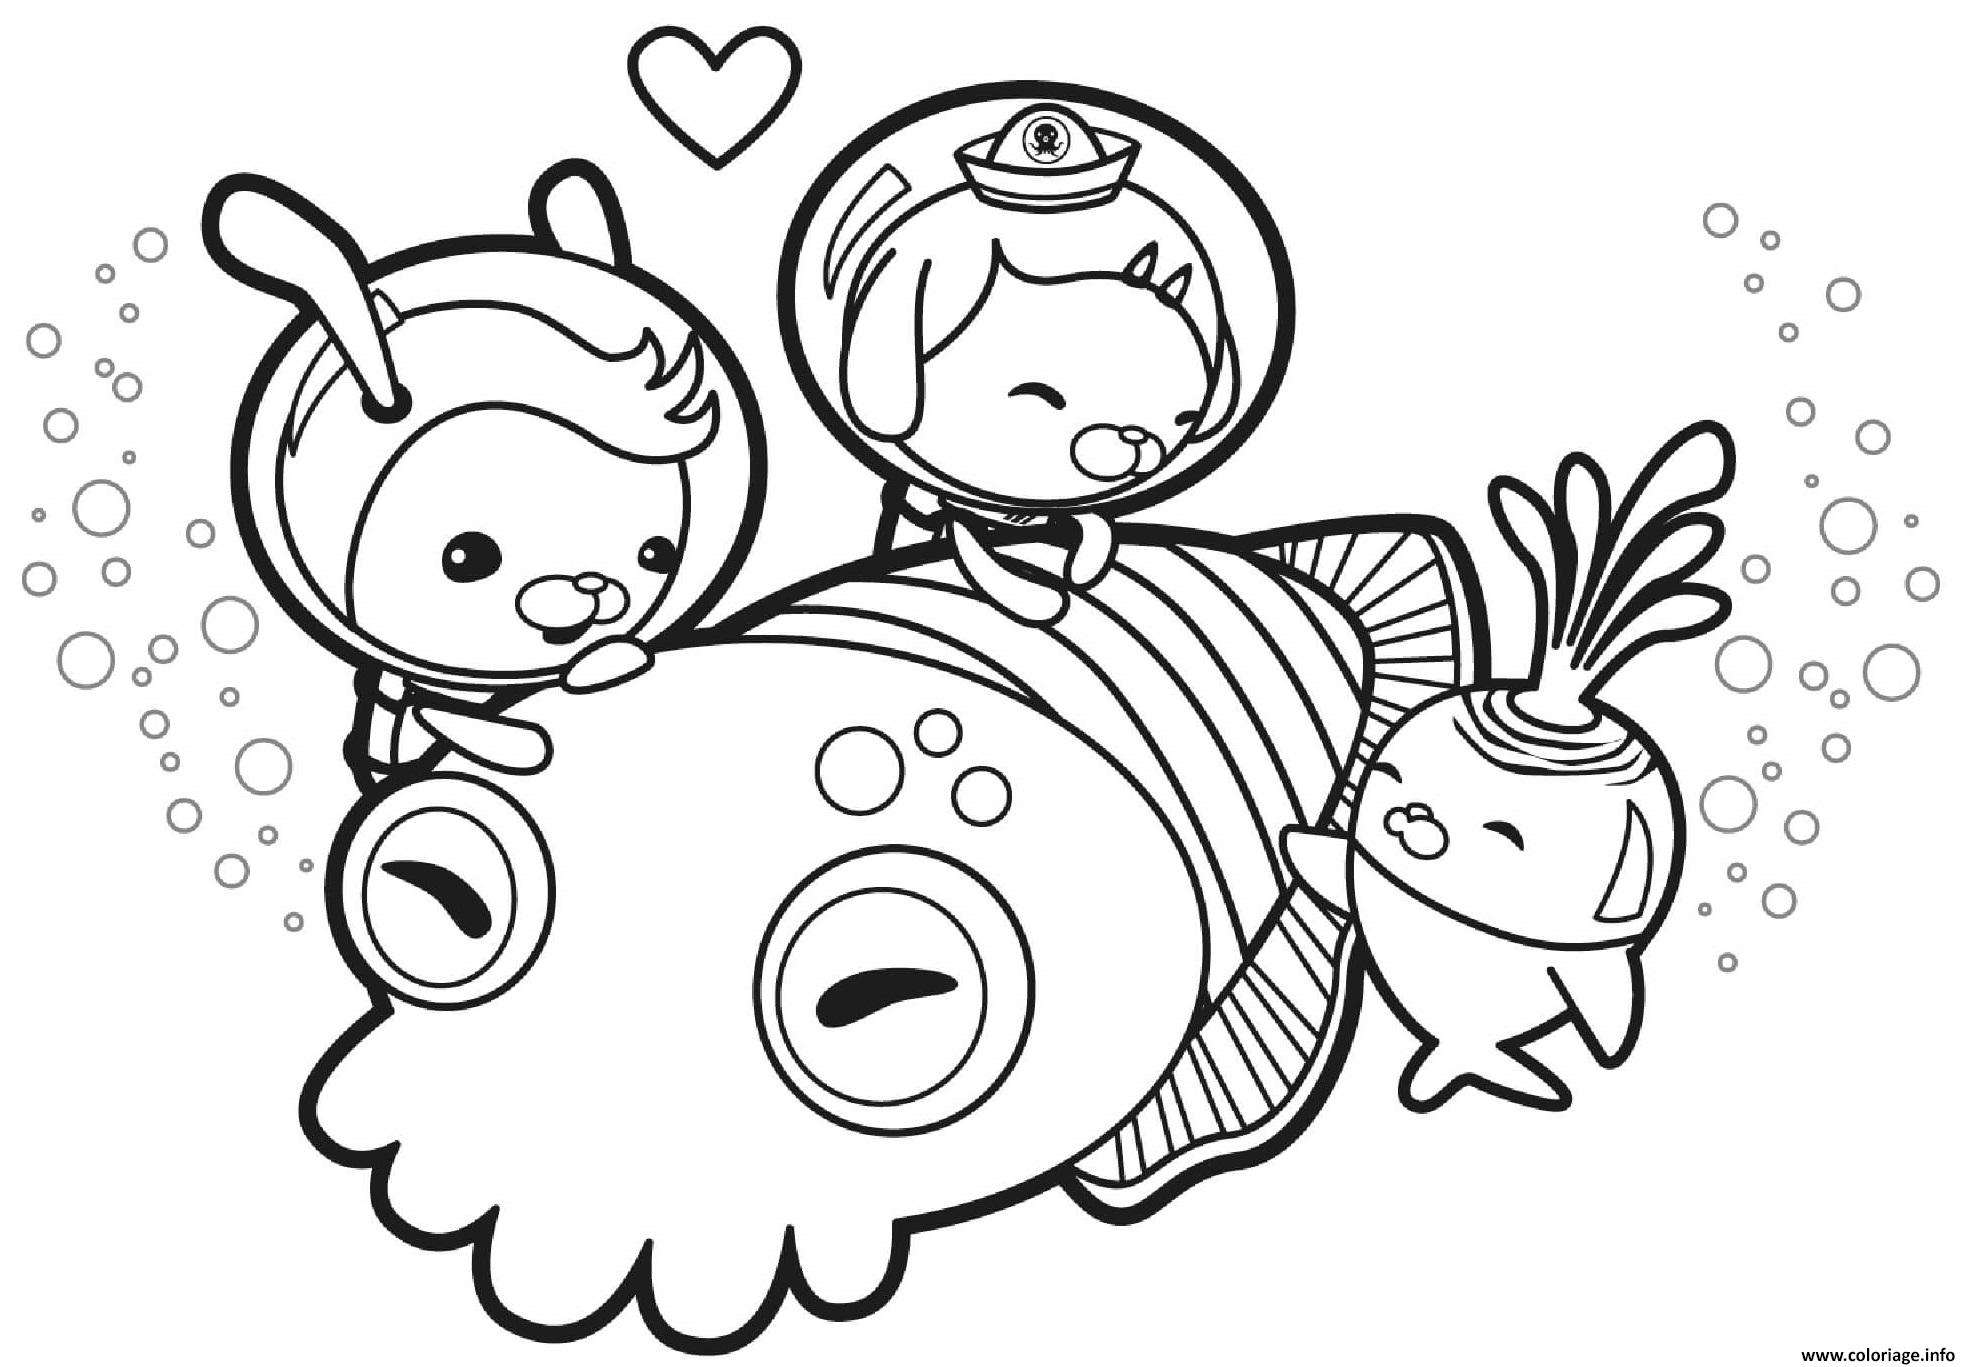 Dessin cuddle with a cuttlefish octonauts Coloriage Gratuit à Imprimer